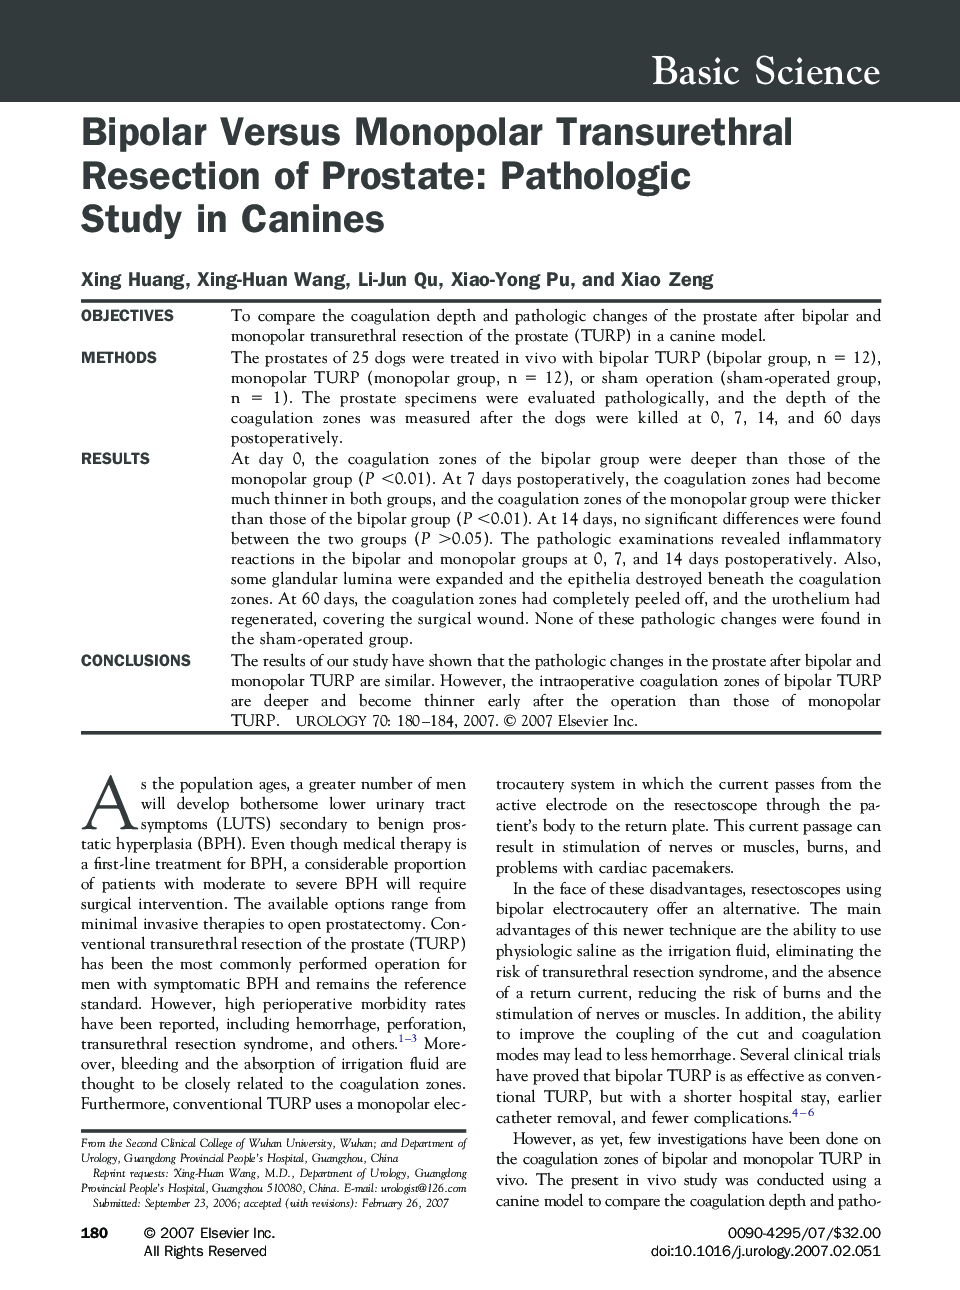 Bipolar Versus Monopolar Transurethral Resection of Prostate: Pathologic Study in Canines